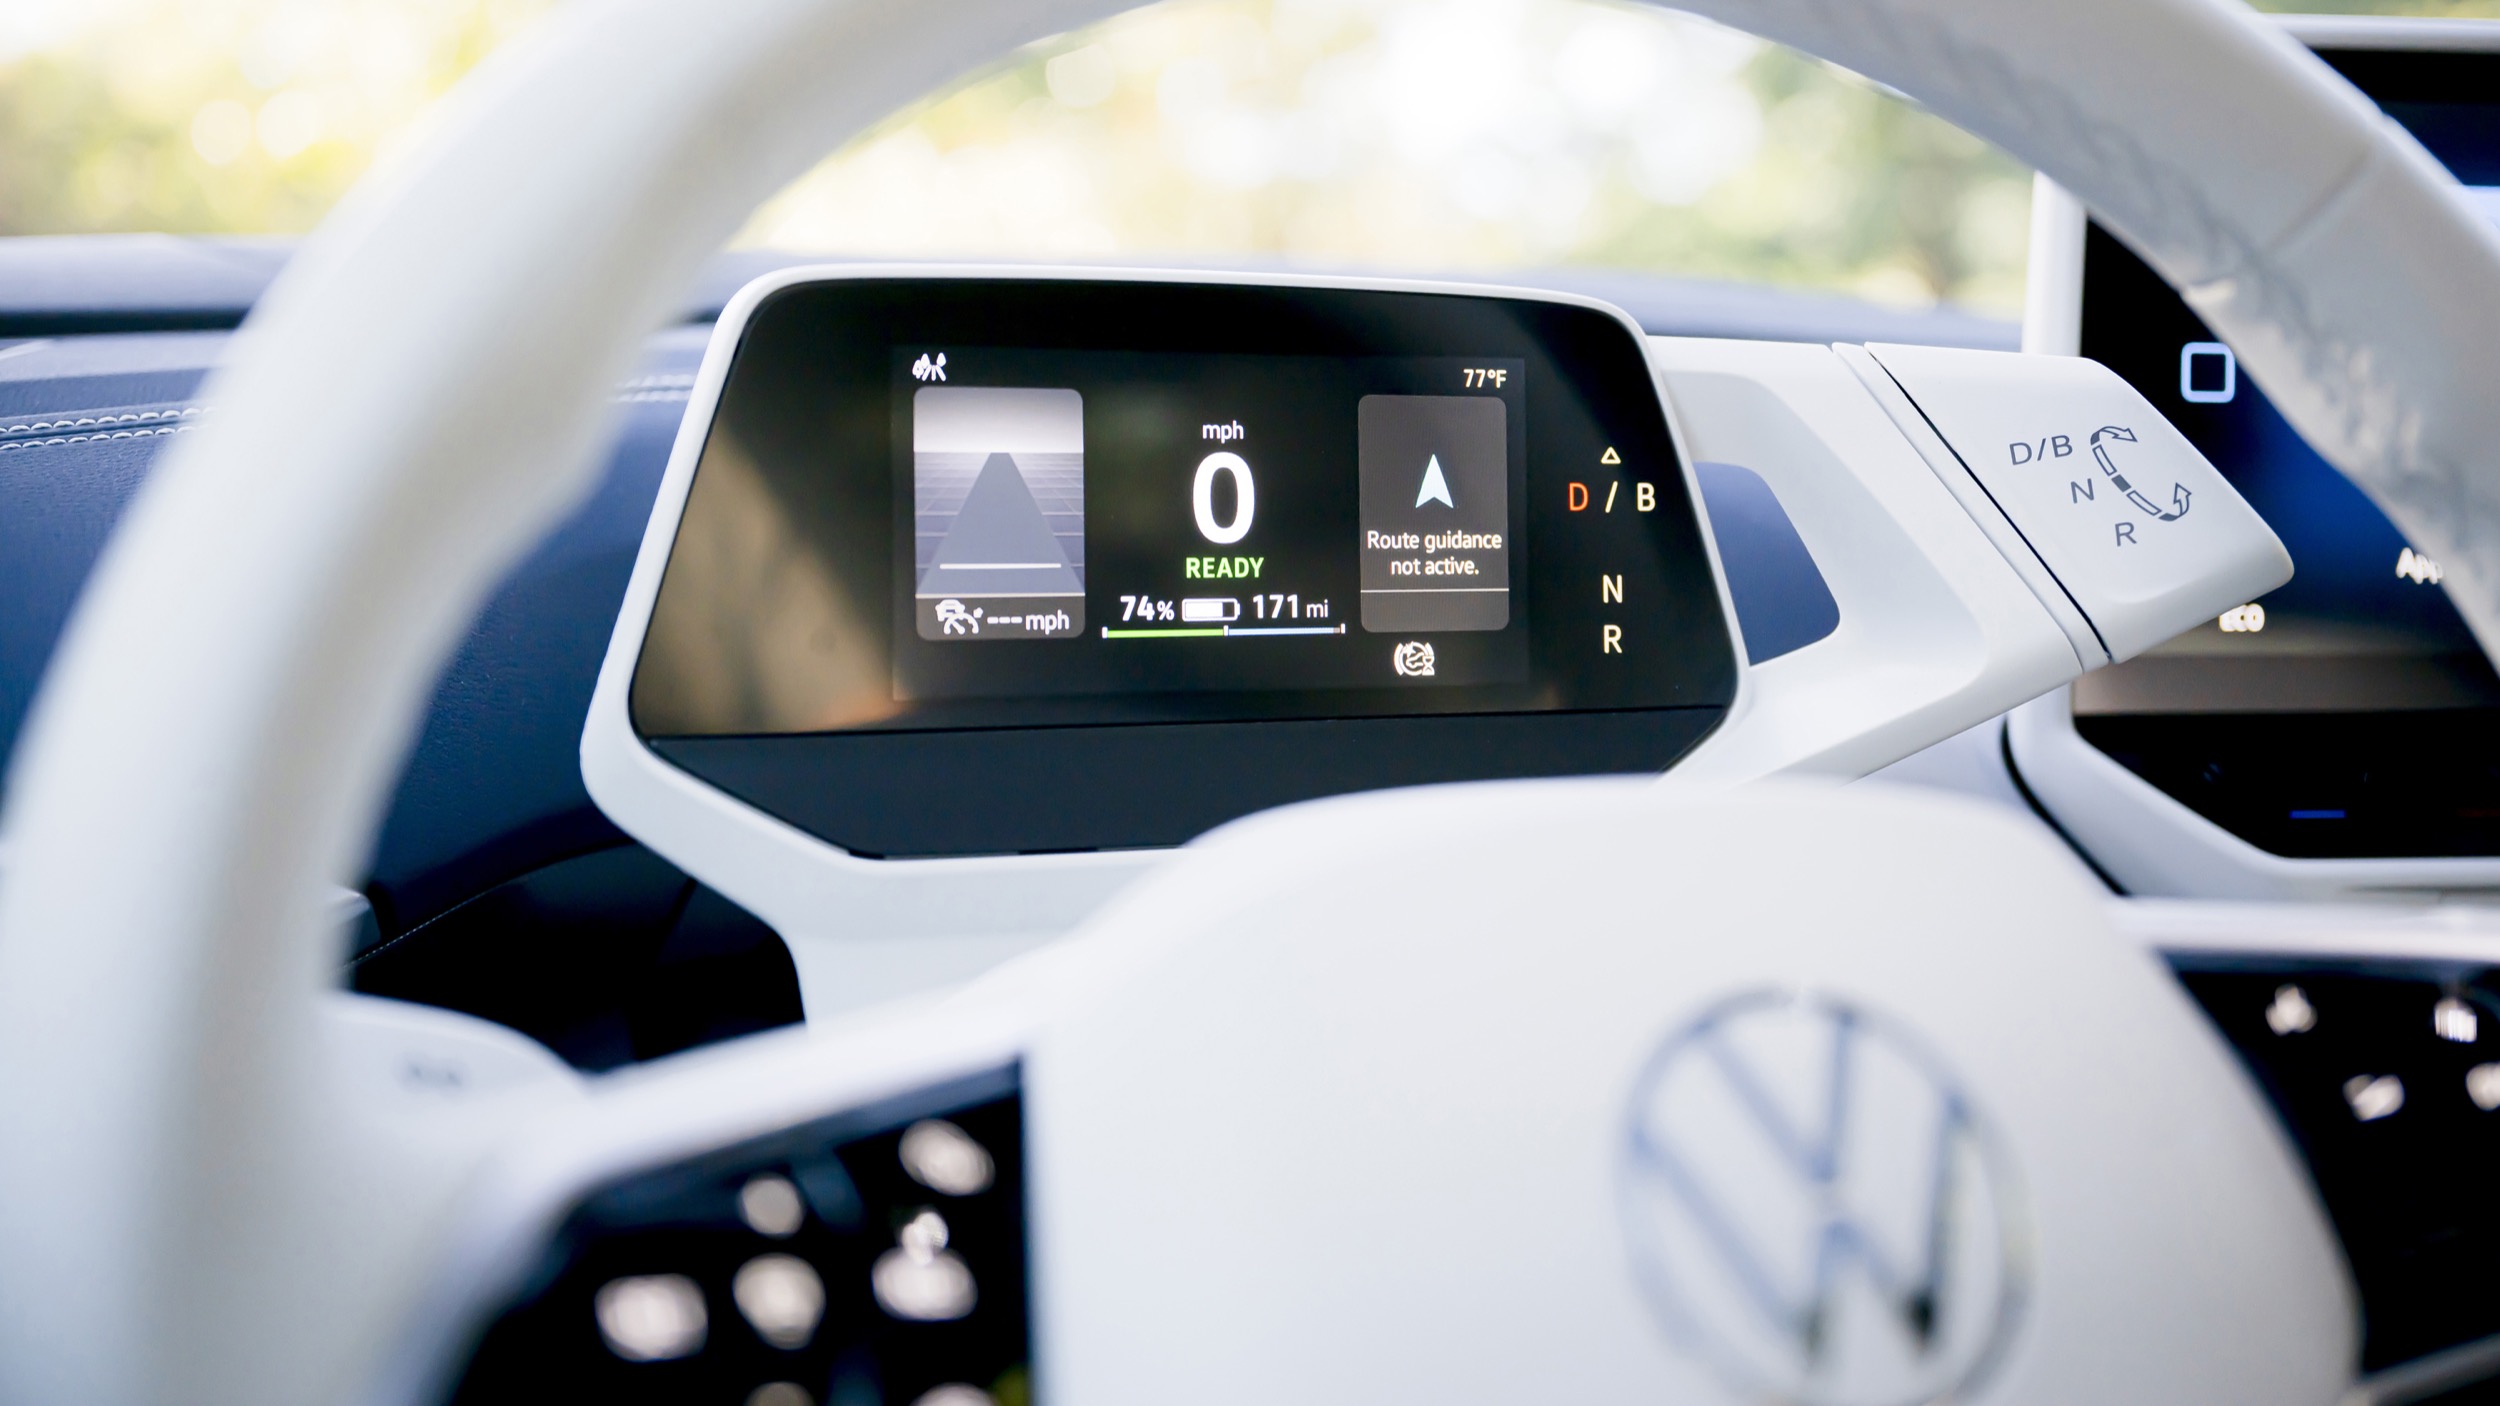 Volkswagen CEO says clunky infotainment overhaul starts now